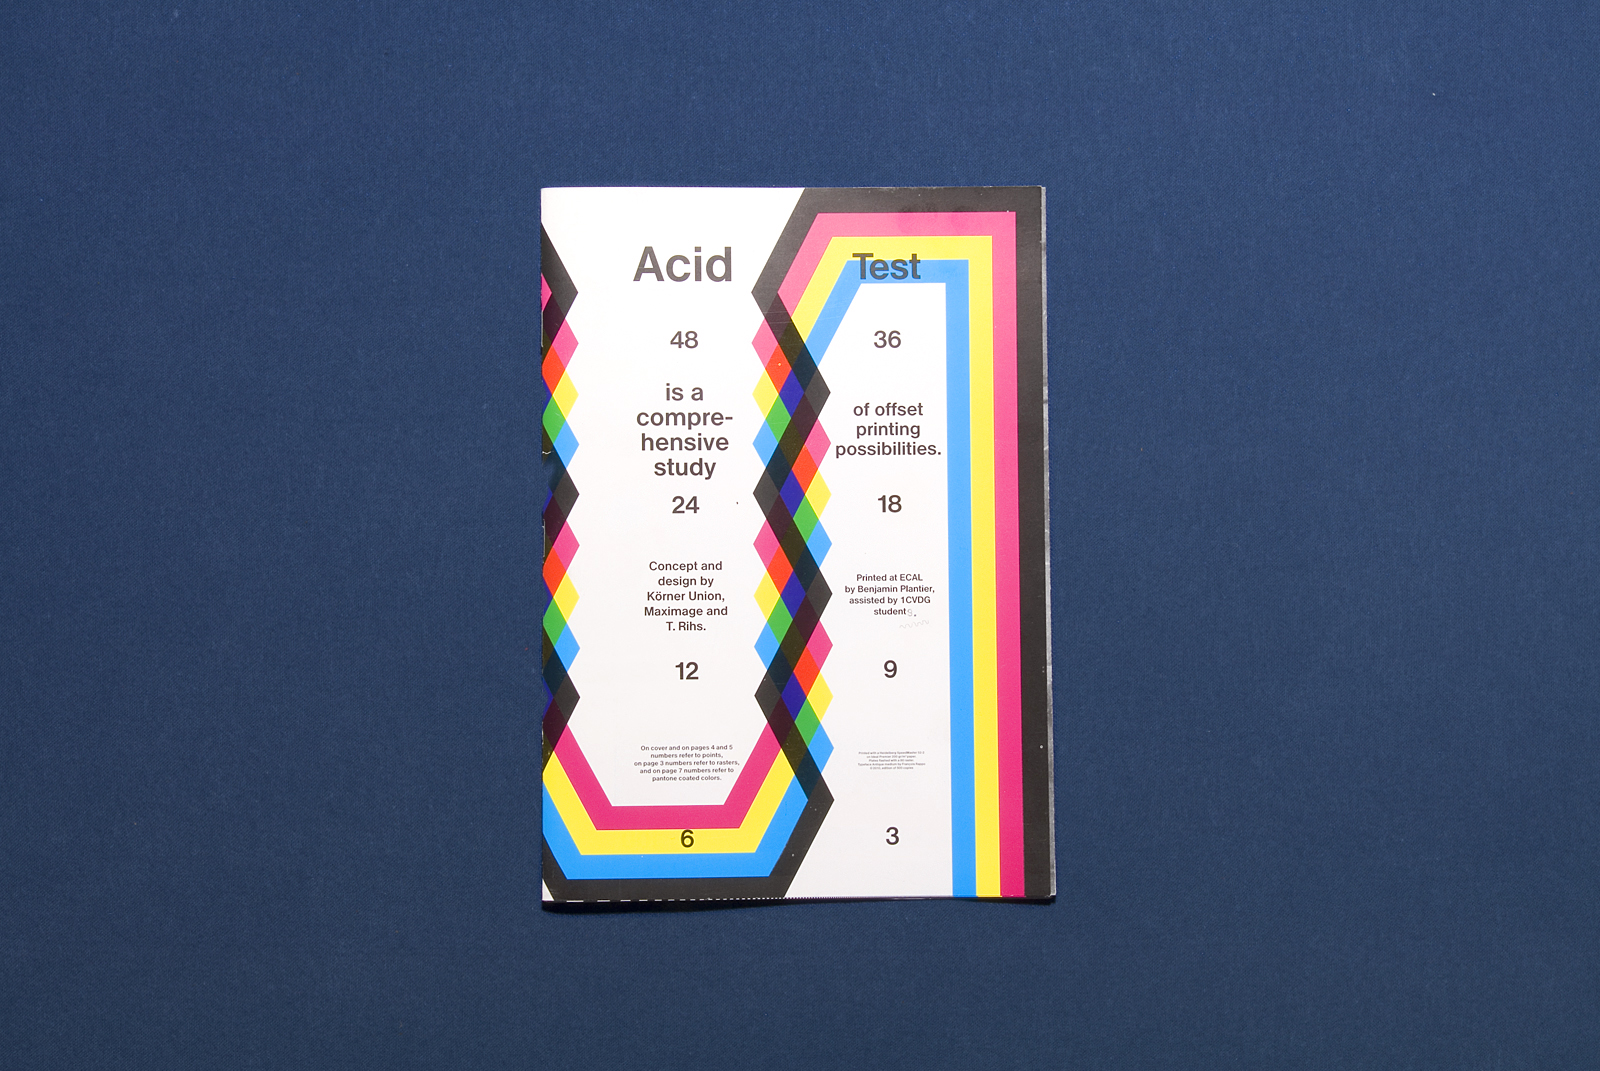 'Acid Test', 2010 - en collaboration avec Tatiana Rihs et Körner Union